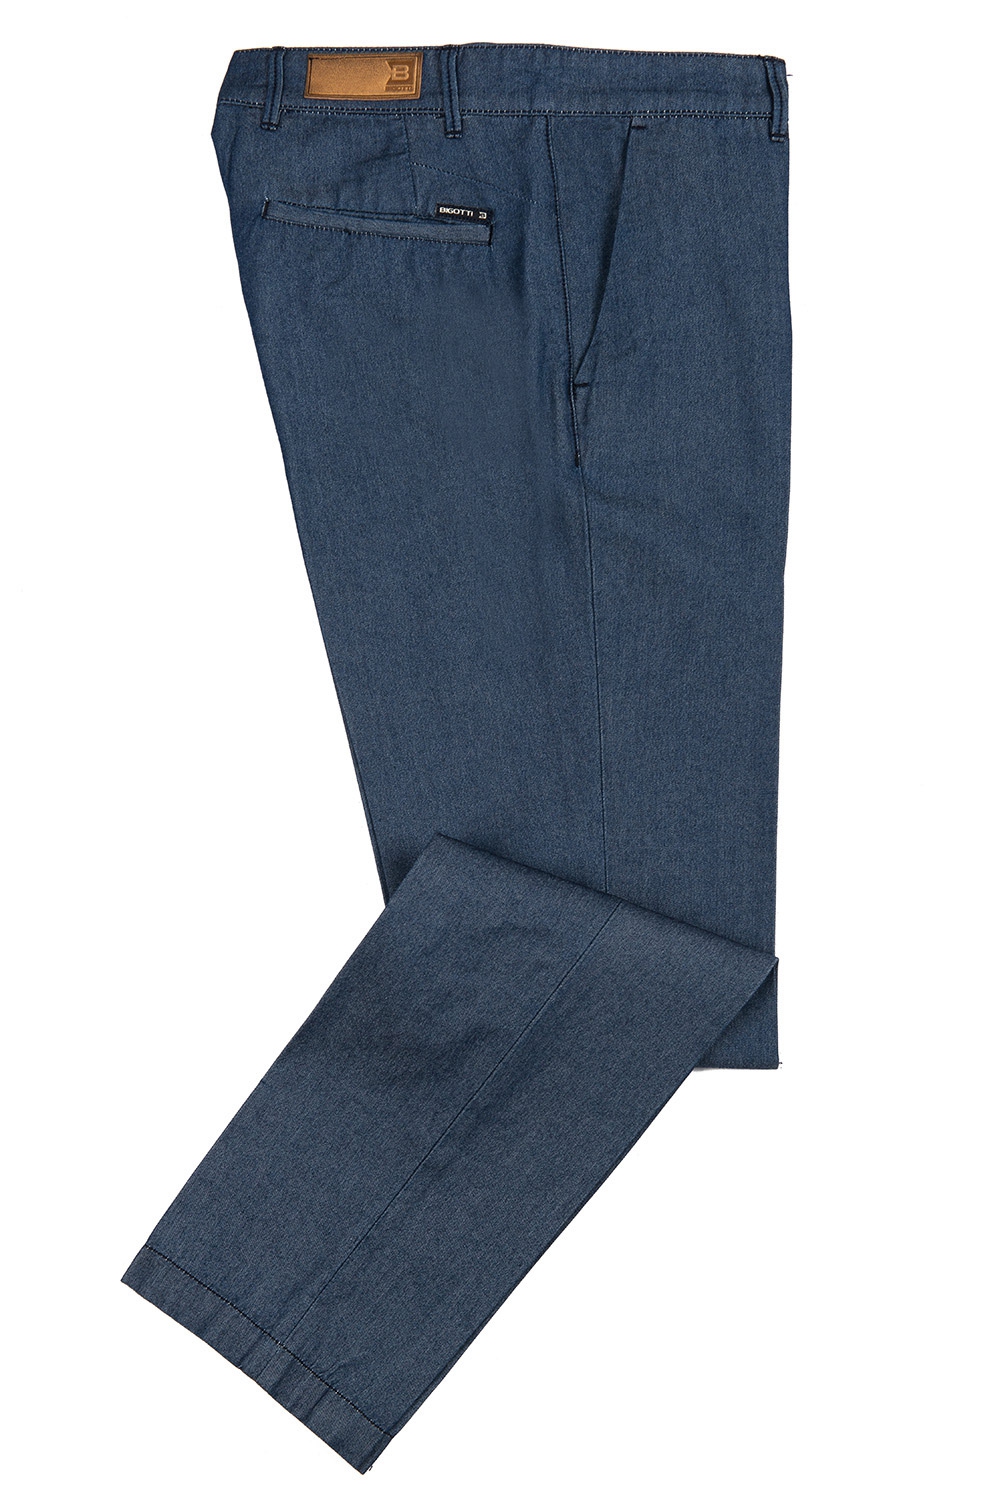 Blue jeans  superslim trento bleumarin uni 0